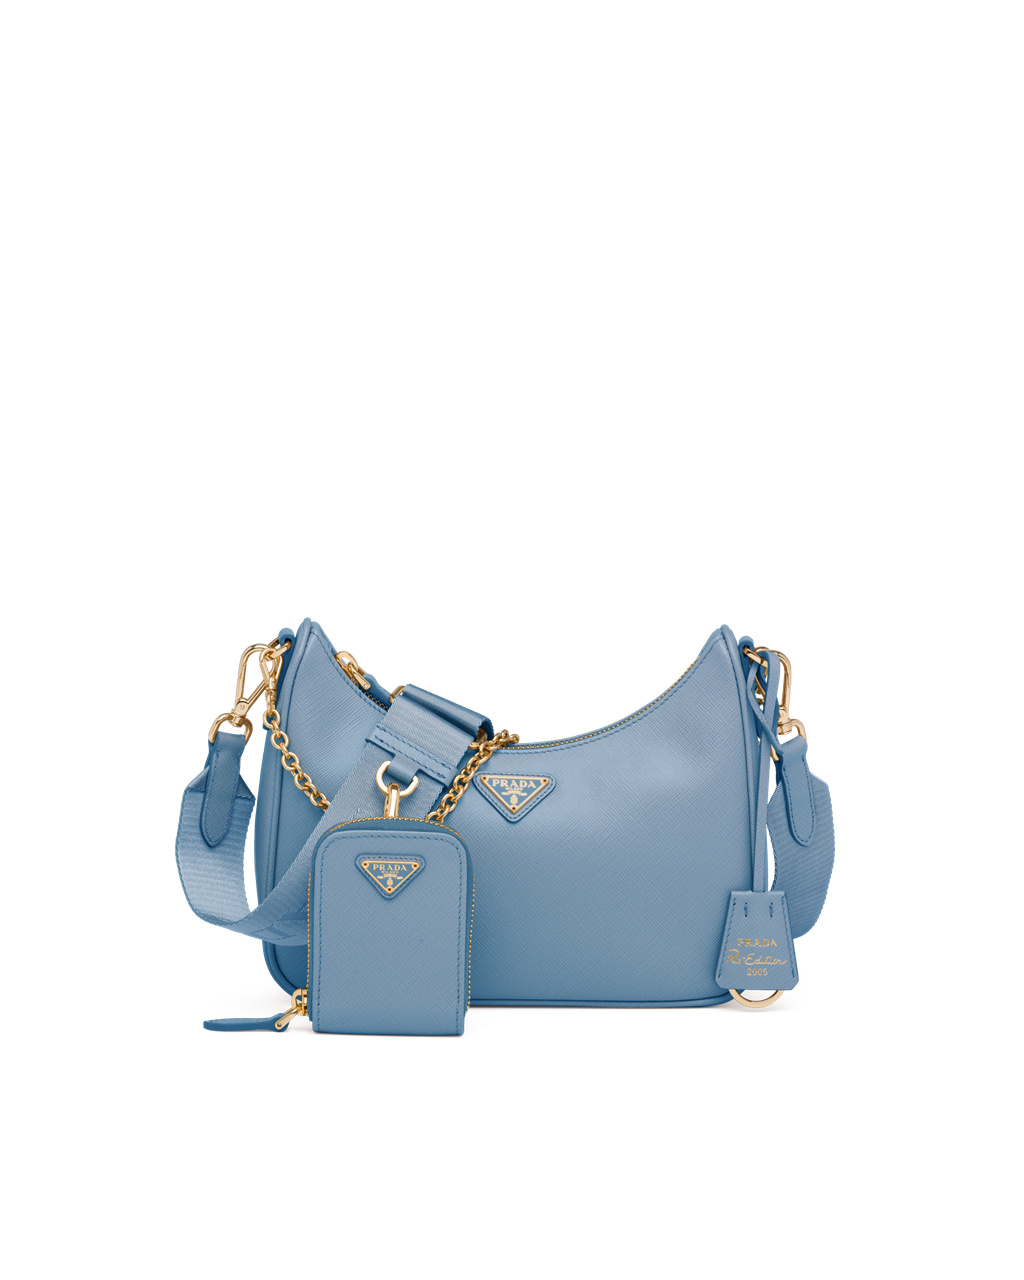 Prada Re-Edition 2005 Saffiano Leather Bag - Cornflower Blue